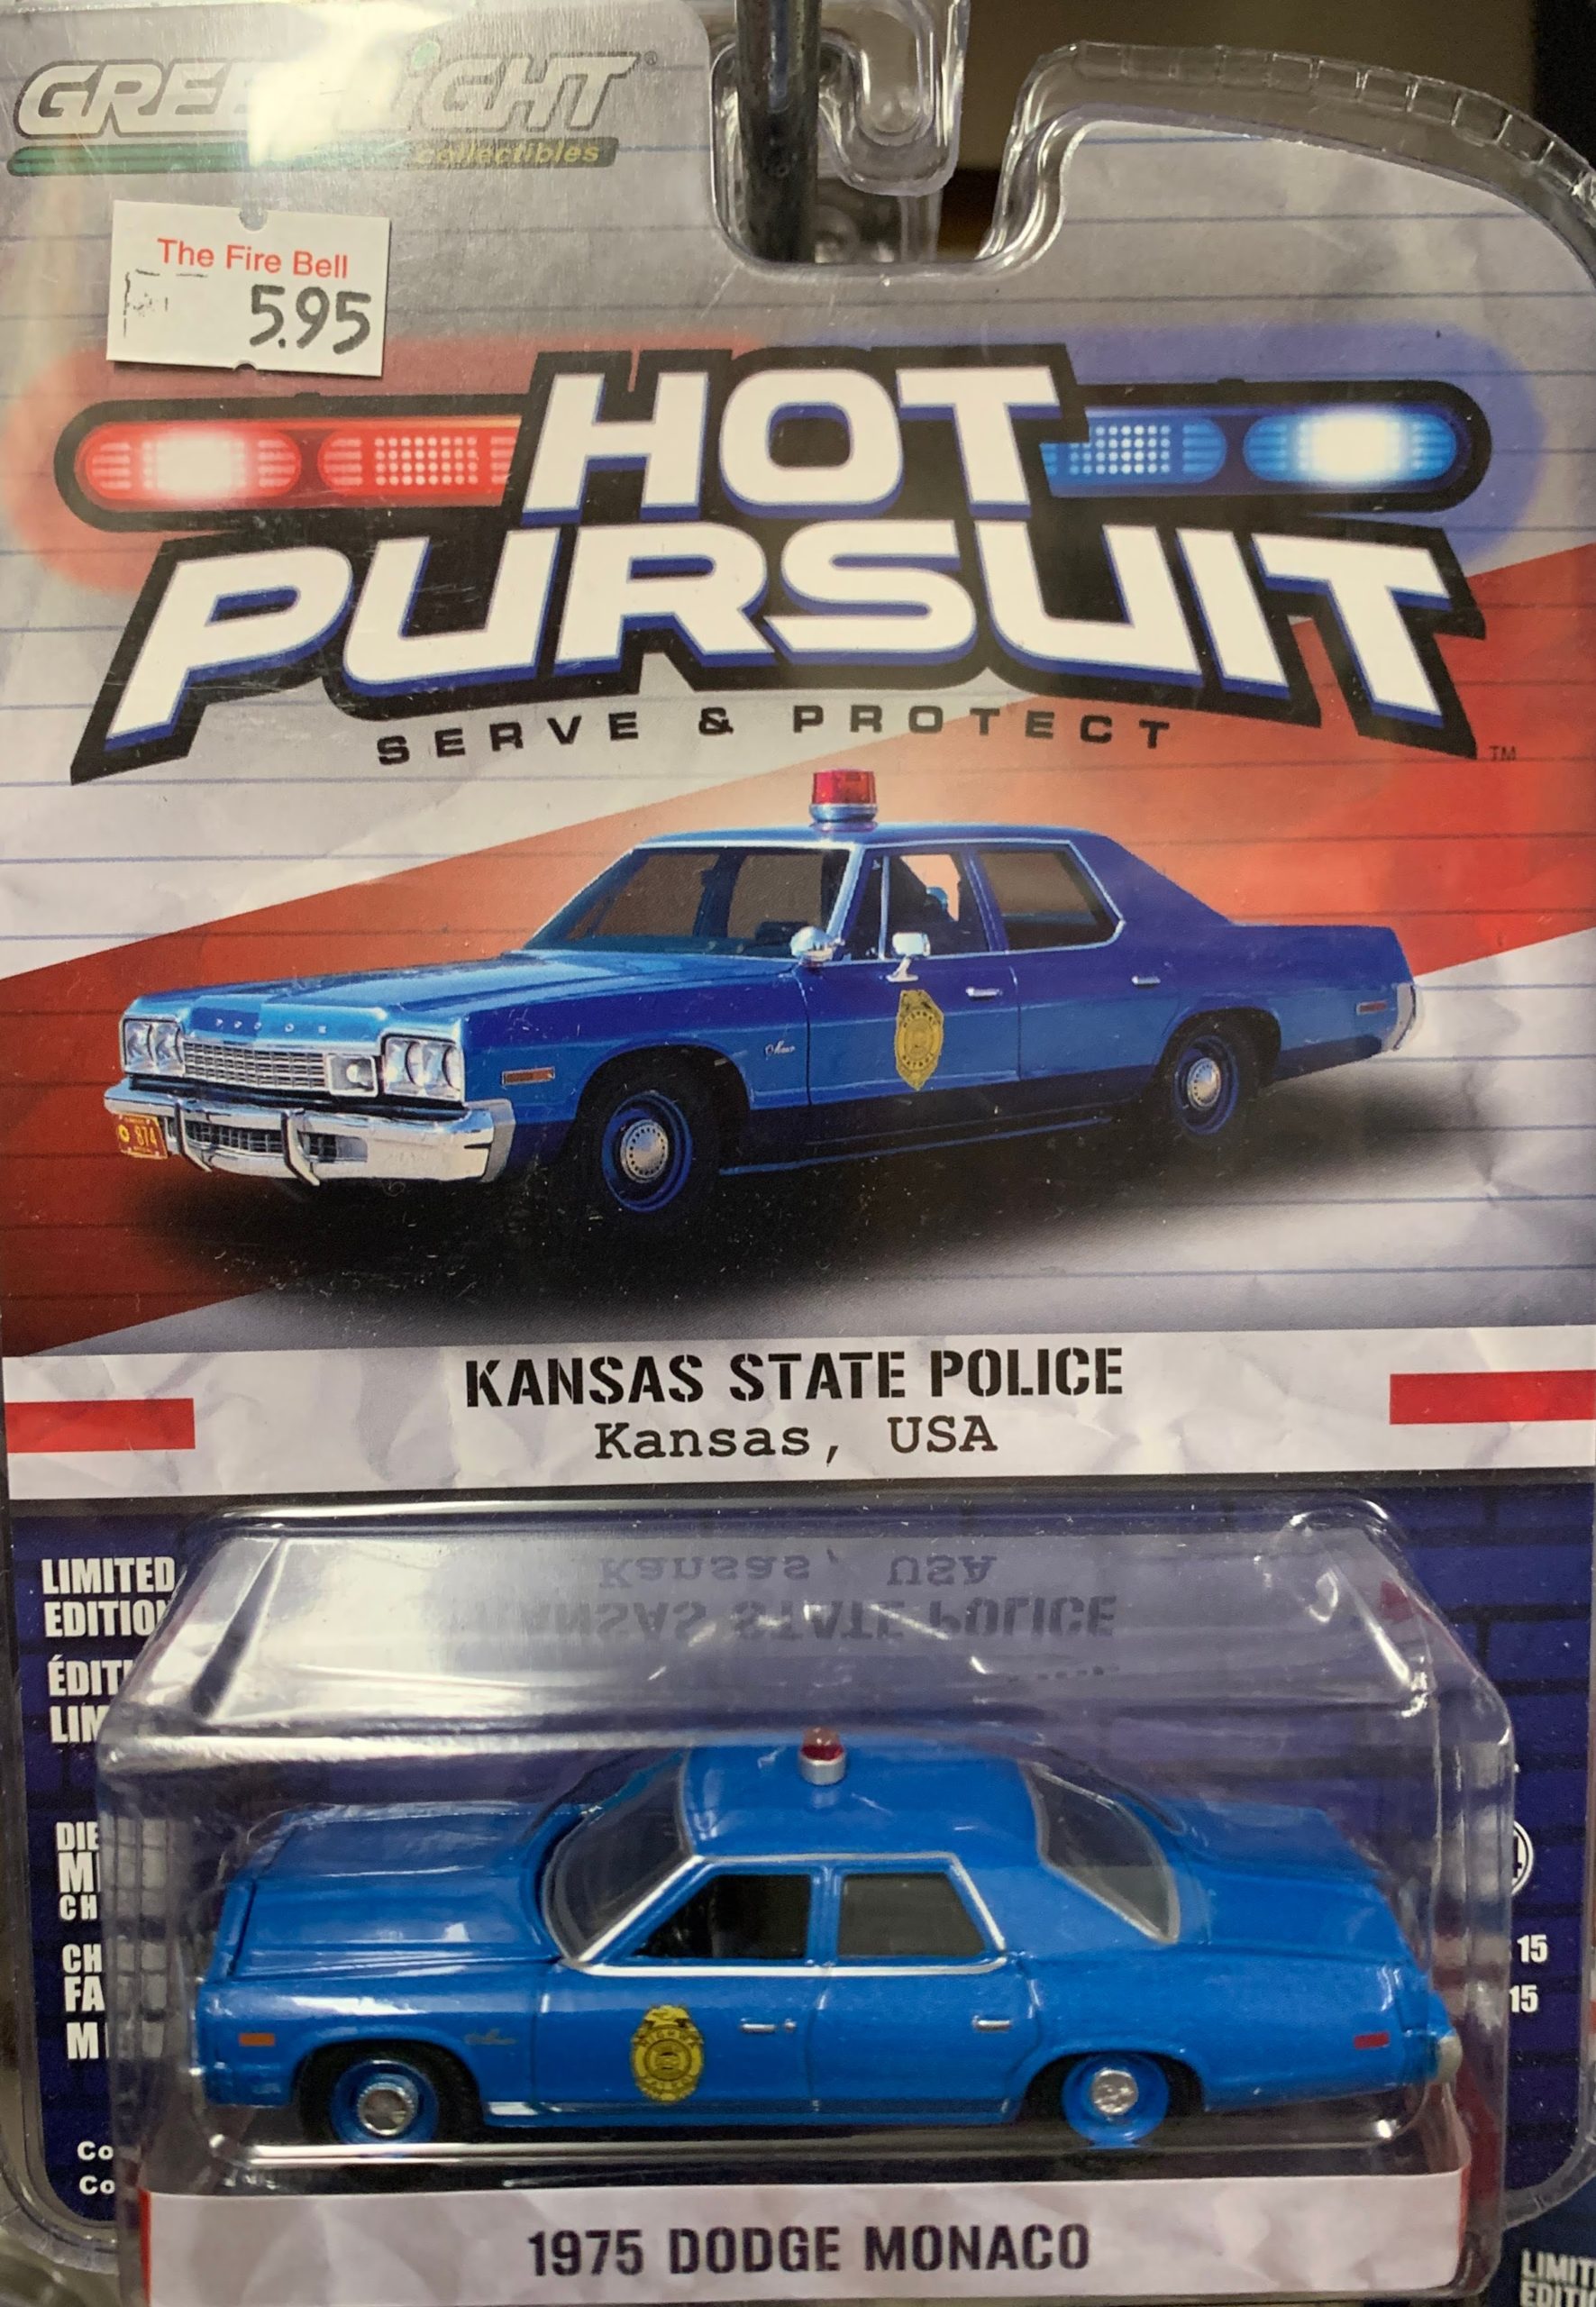 Dodge Monaco, 1975, Kansas State Police